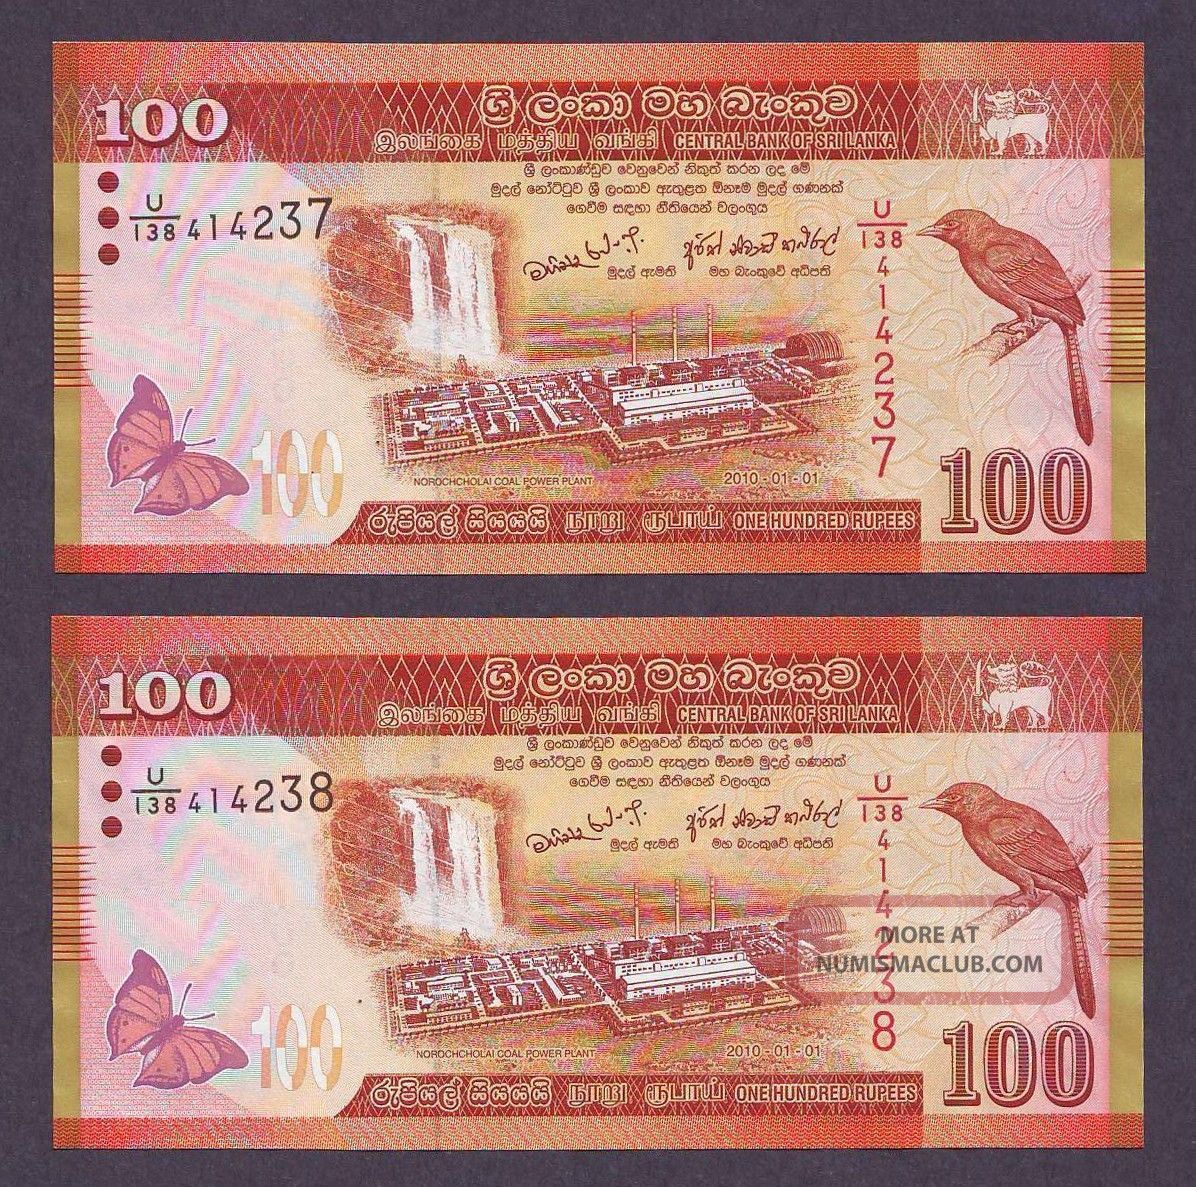 Two Consecutive Number Sri Lanka 100 Rupees 2010 Unc Banknote Ceylon P - 125 Asia photo